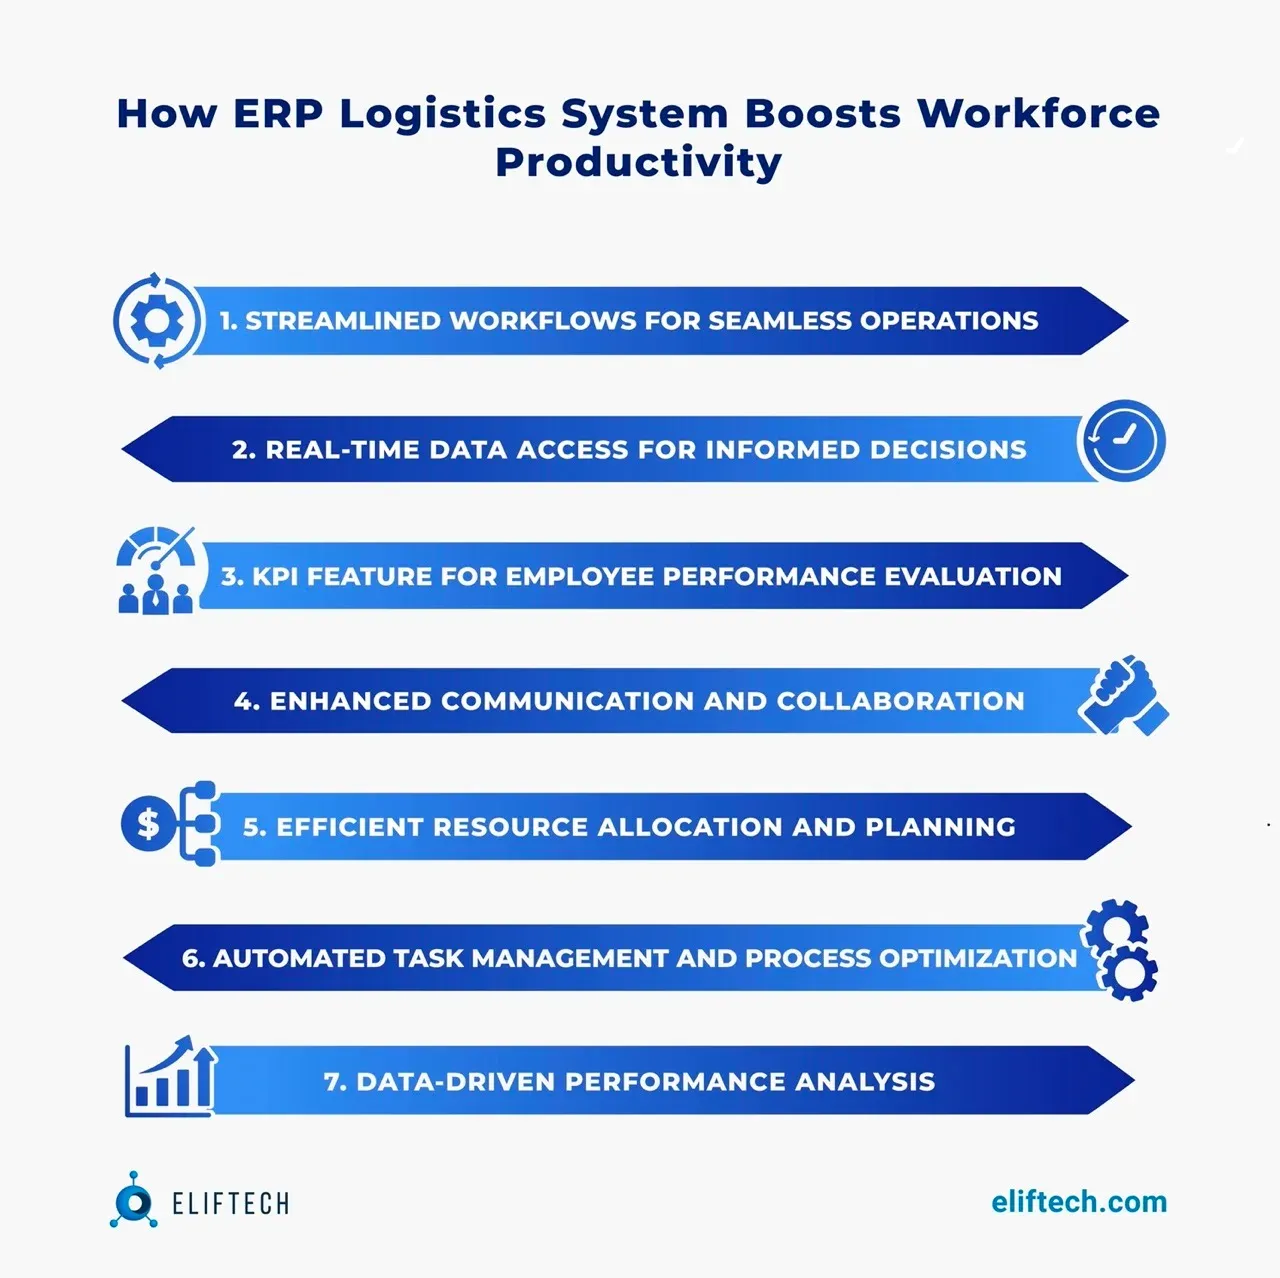 How an ERP Logistics System Boosts Workforce Productivity